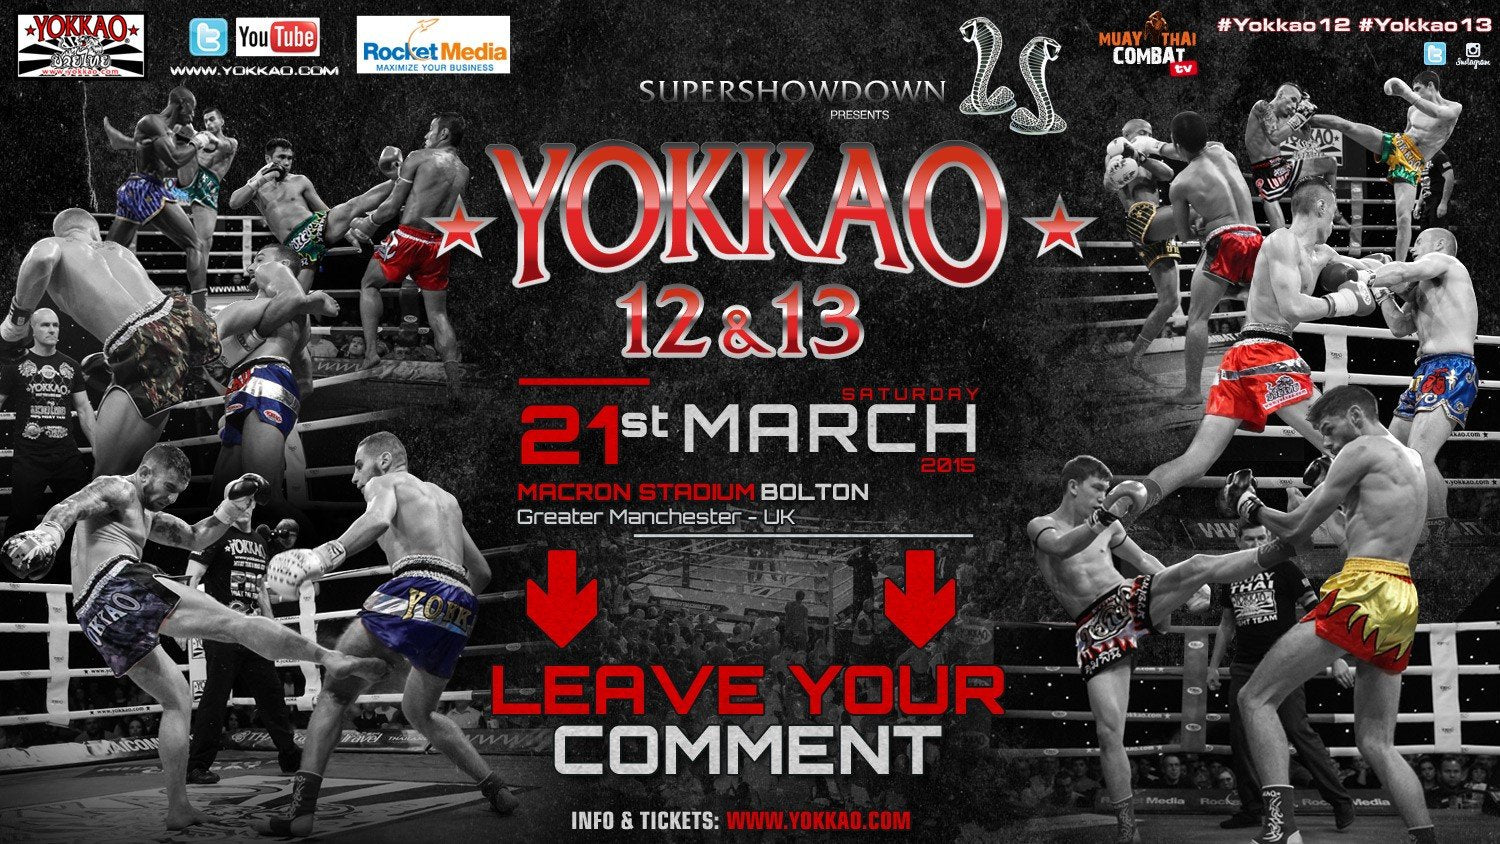 Guess who will be YOKKAO 12 - YOKKAO 13's main events and Win Yokkao!